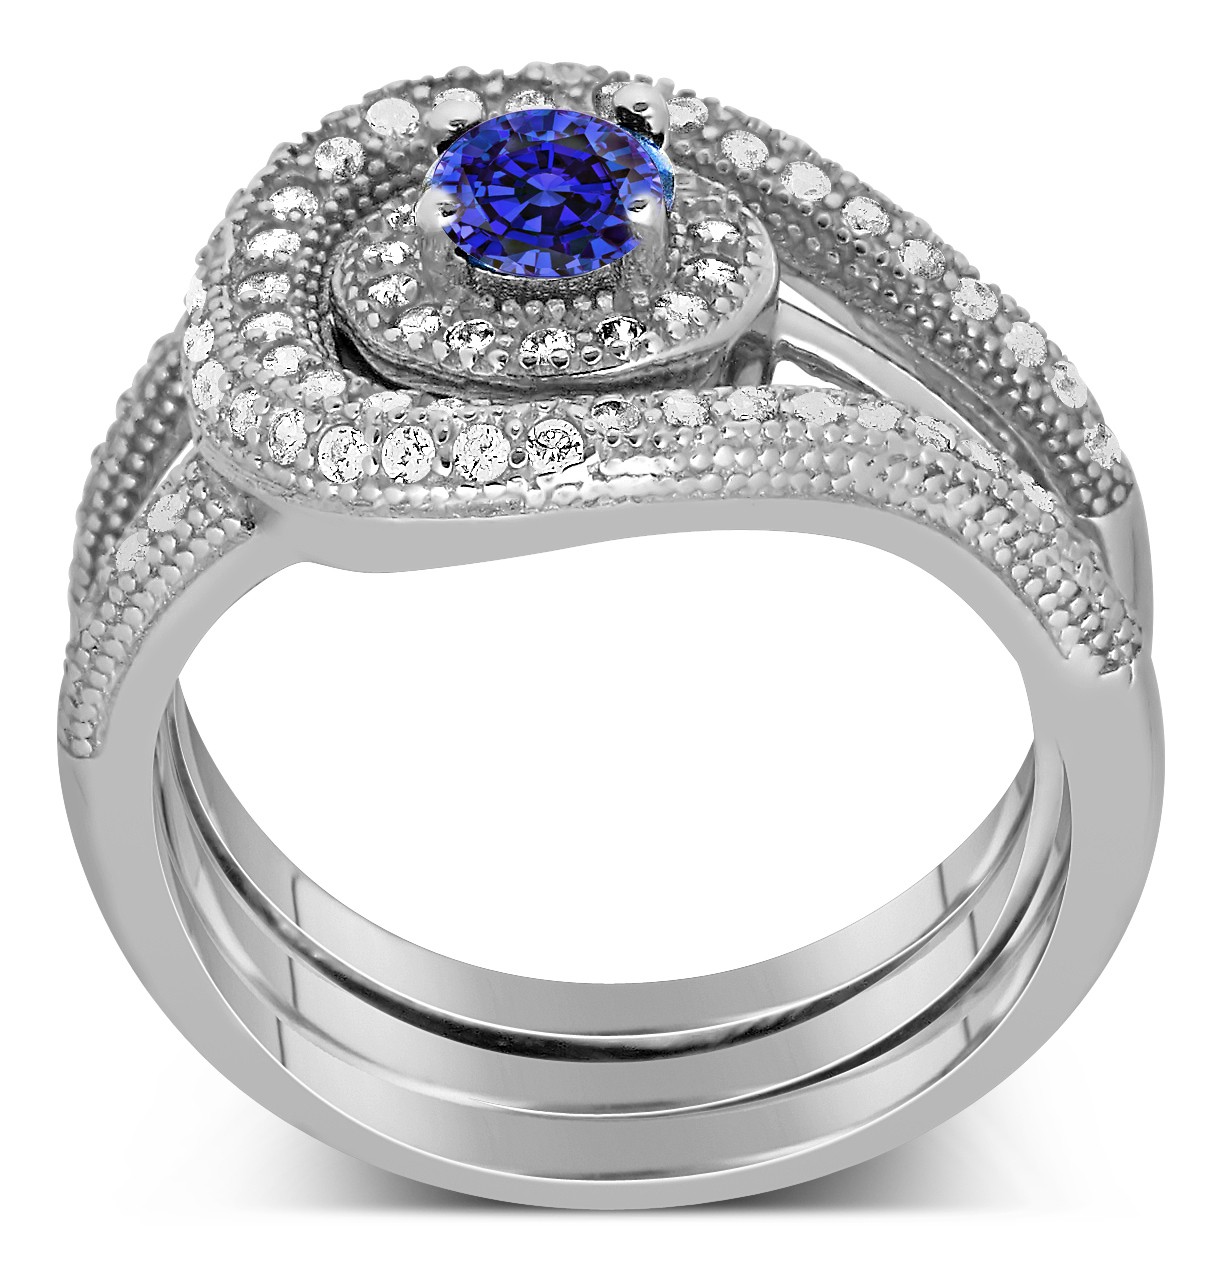 ... Carat Designer Sapphire and Diamond Wedding Ring Set in White Gold